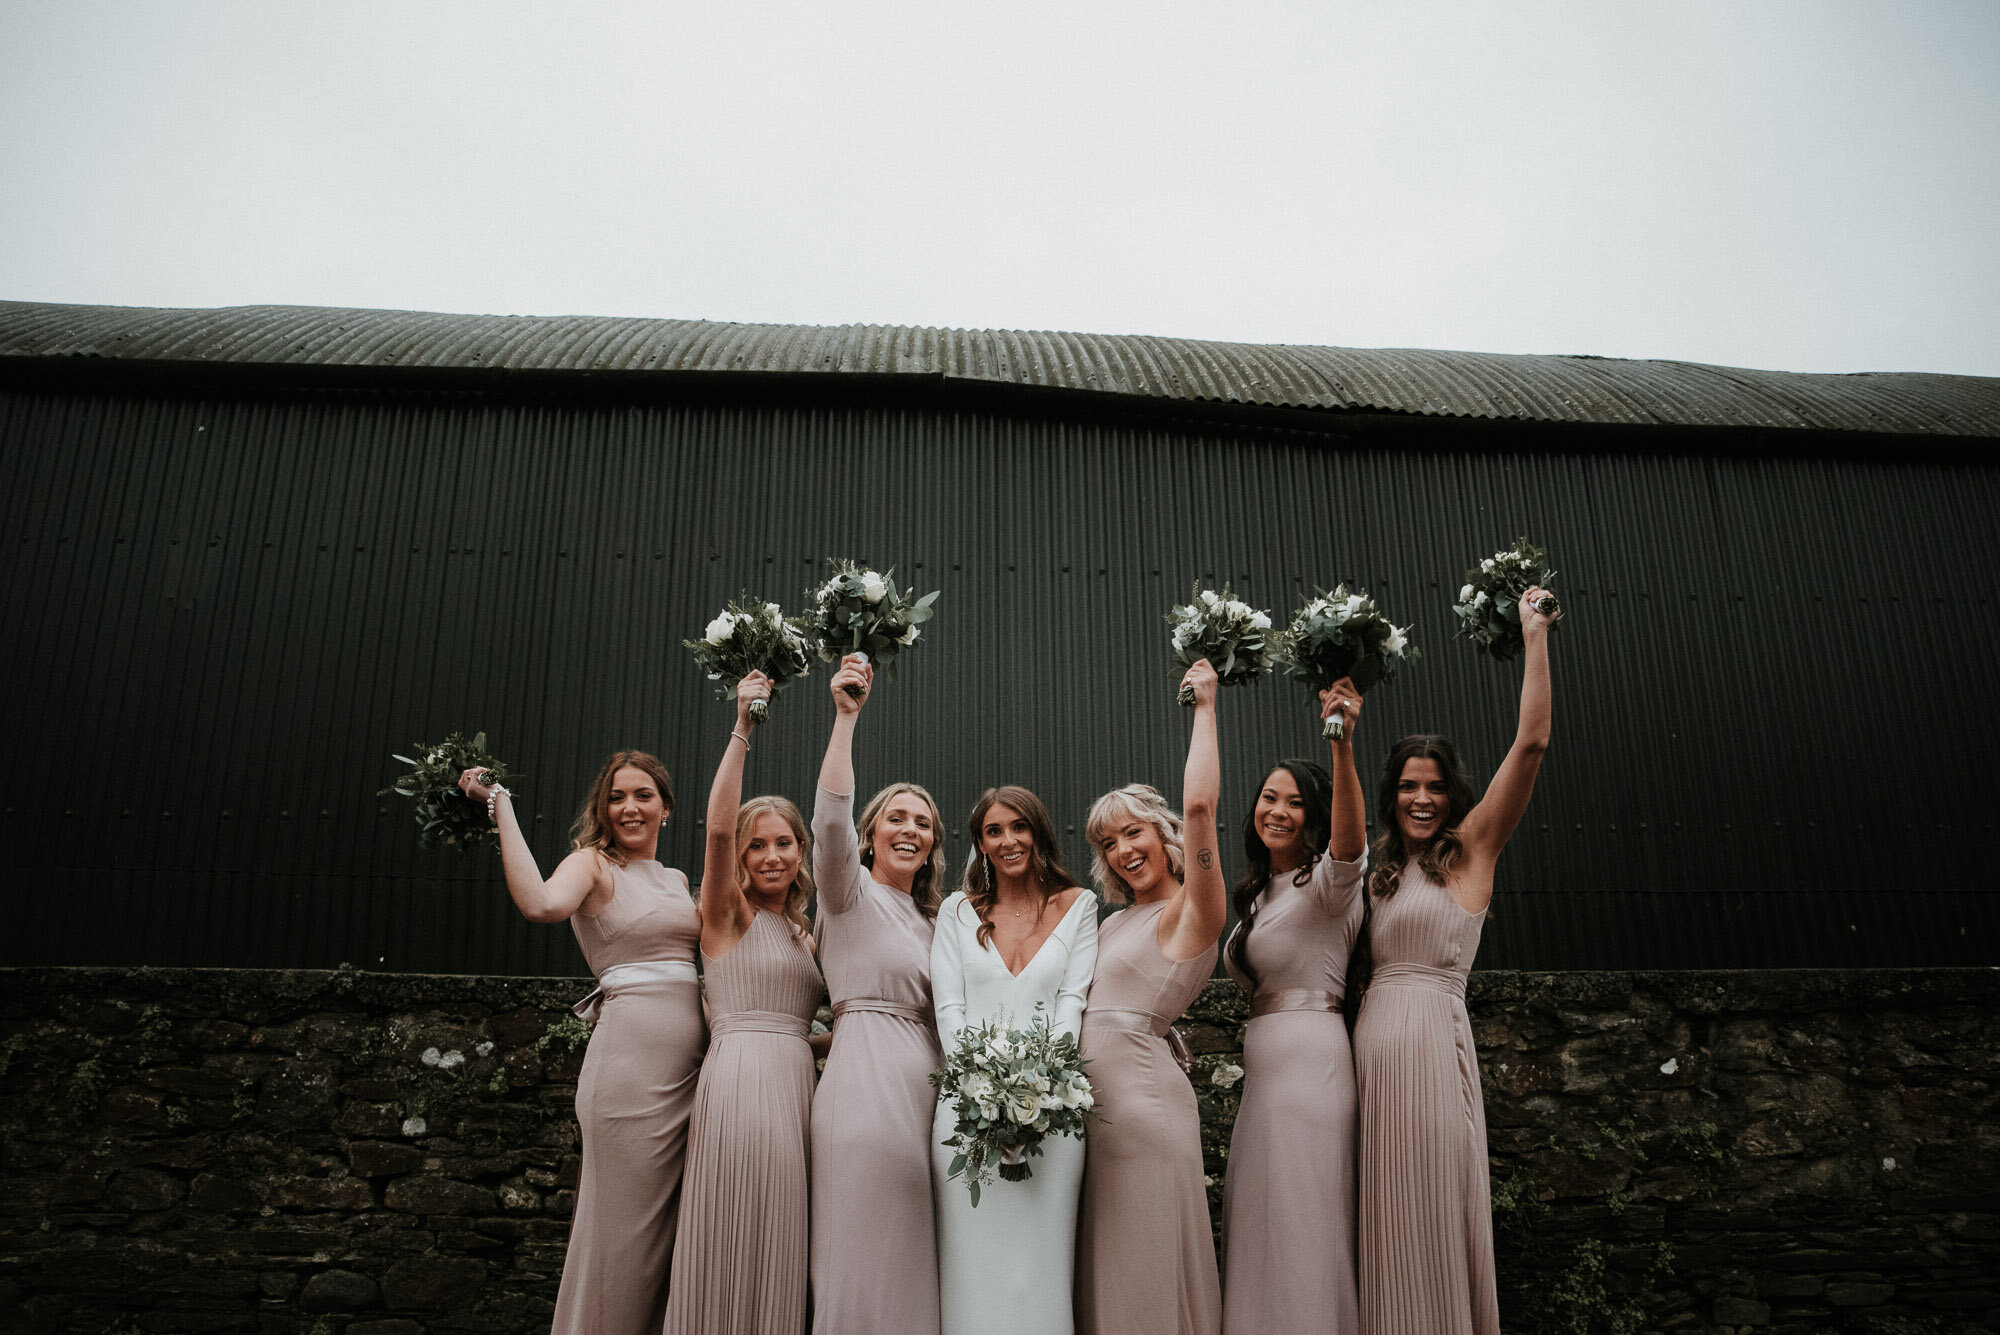 Anran Barn Wedding // Devon Wedding Photographer Katy Jones // Natural style wedding photography // Group photos